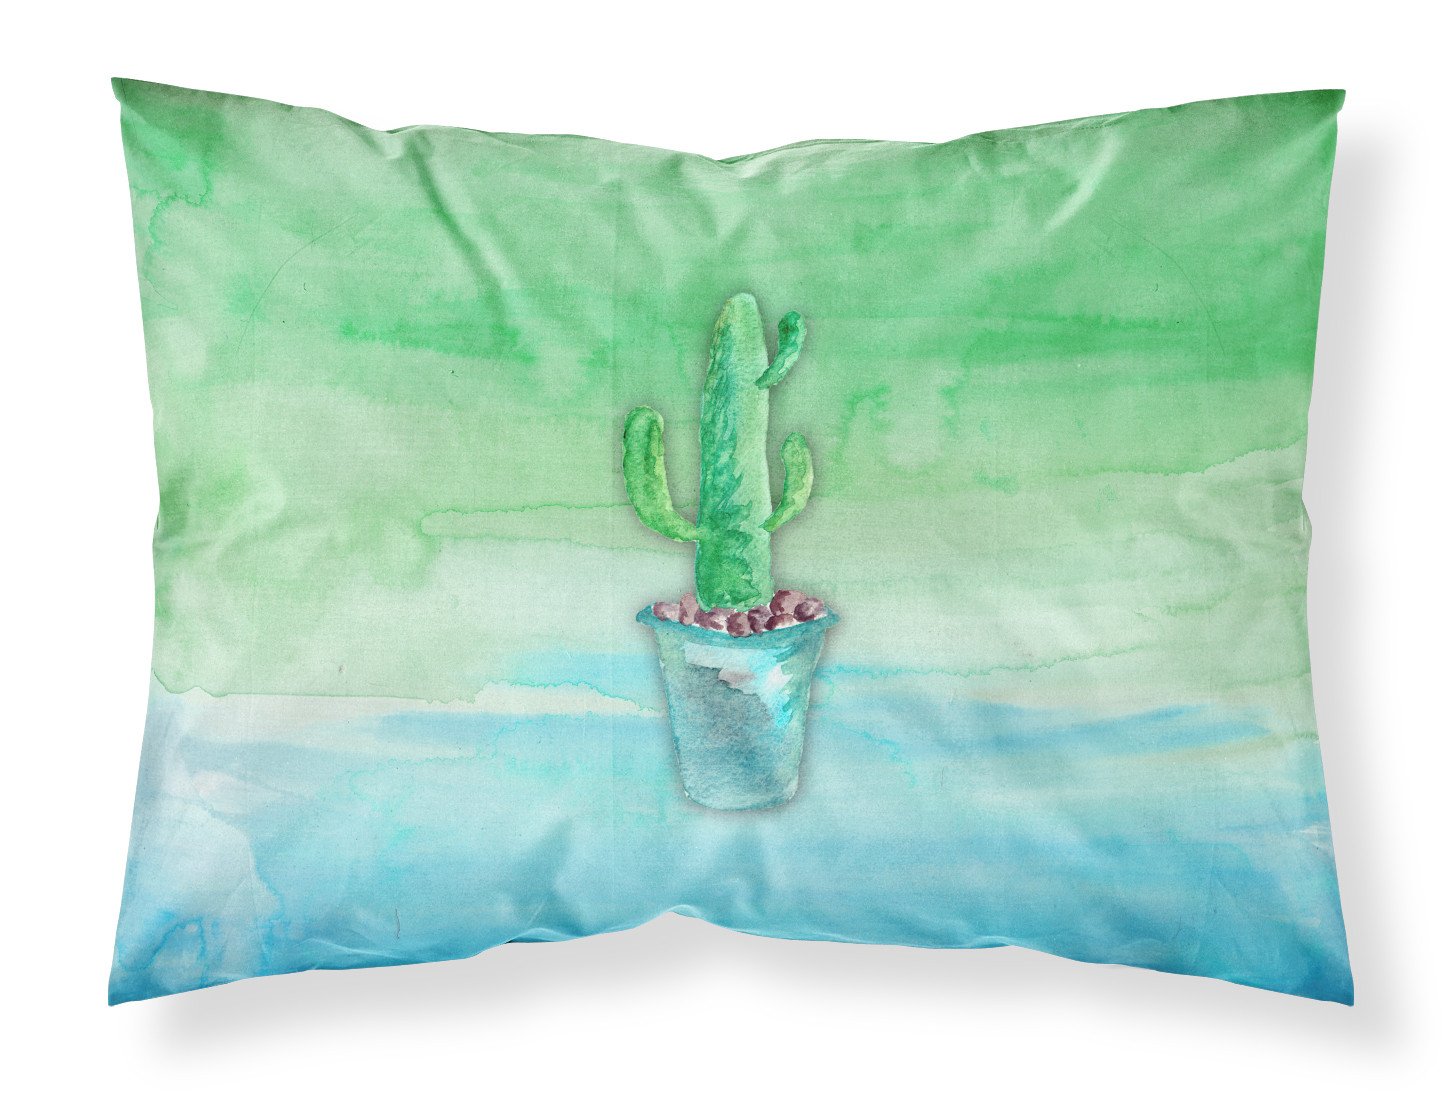 Cactus Teal and Green Watercolor Fabric Standard Pillowcase BB7362PILLOWCASE by Caroline's Treasures